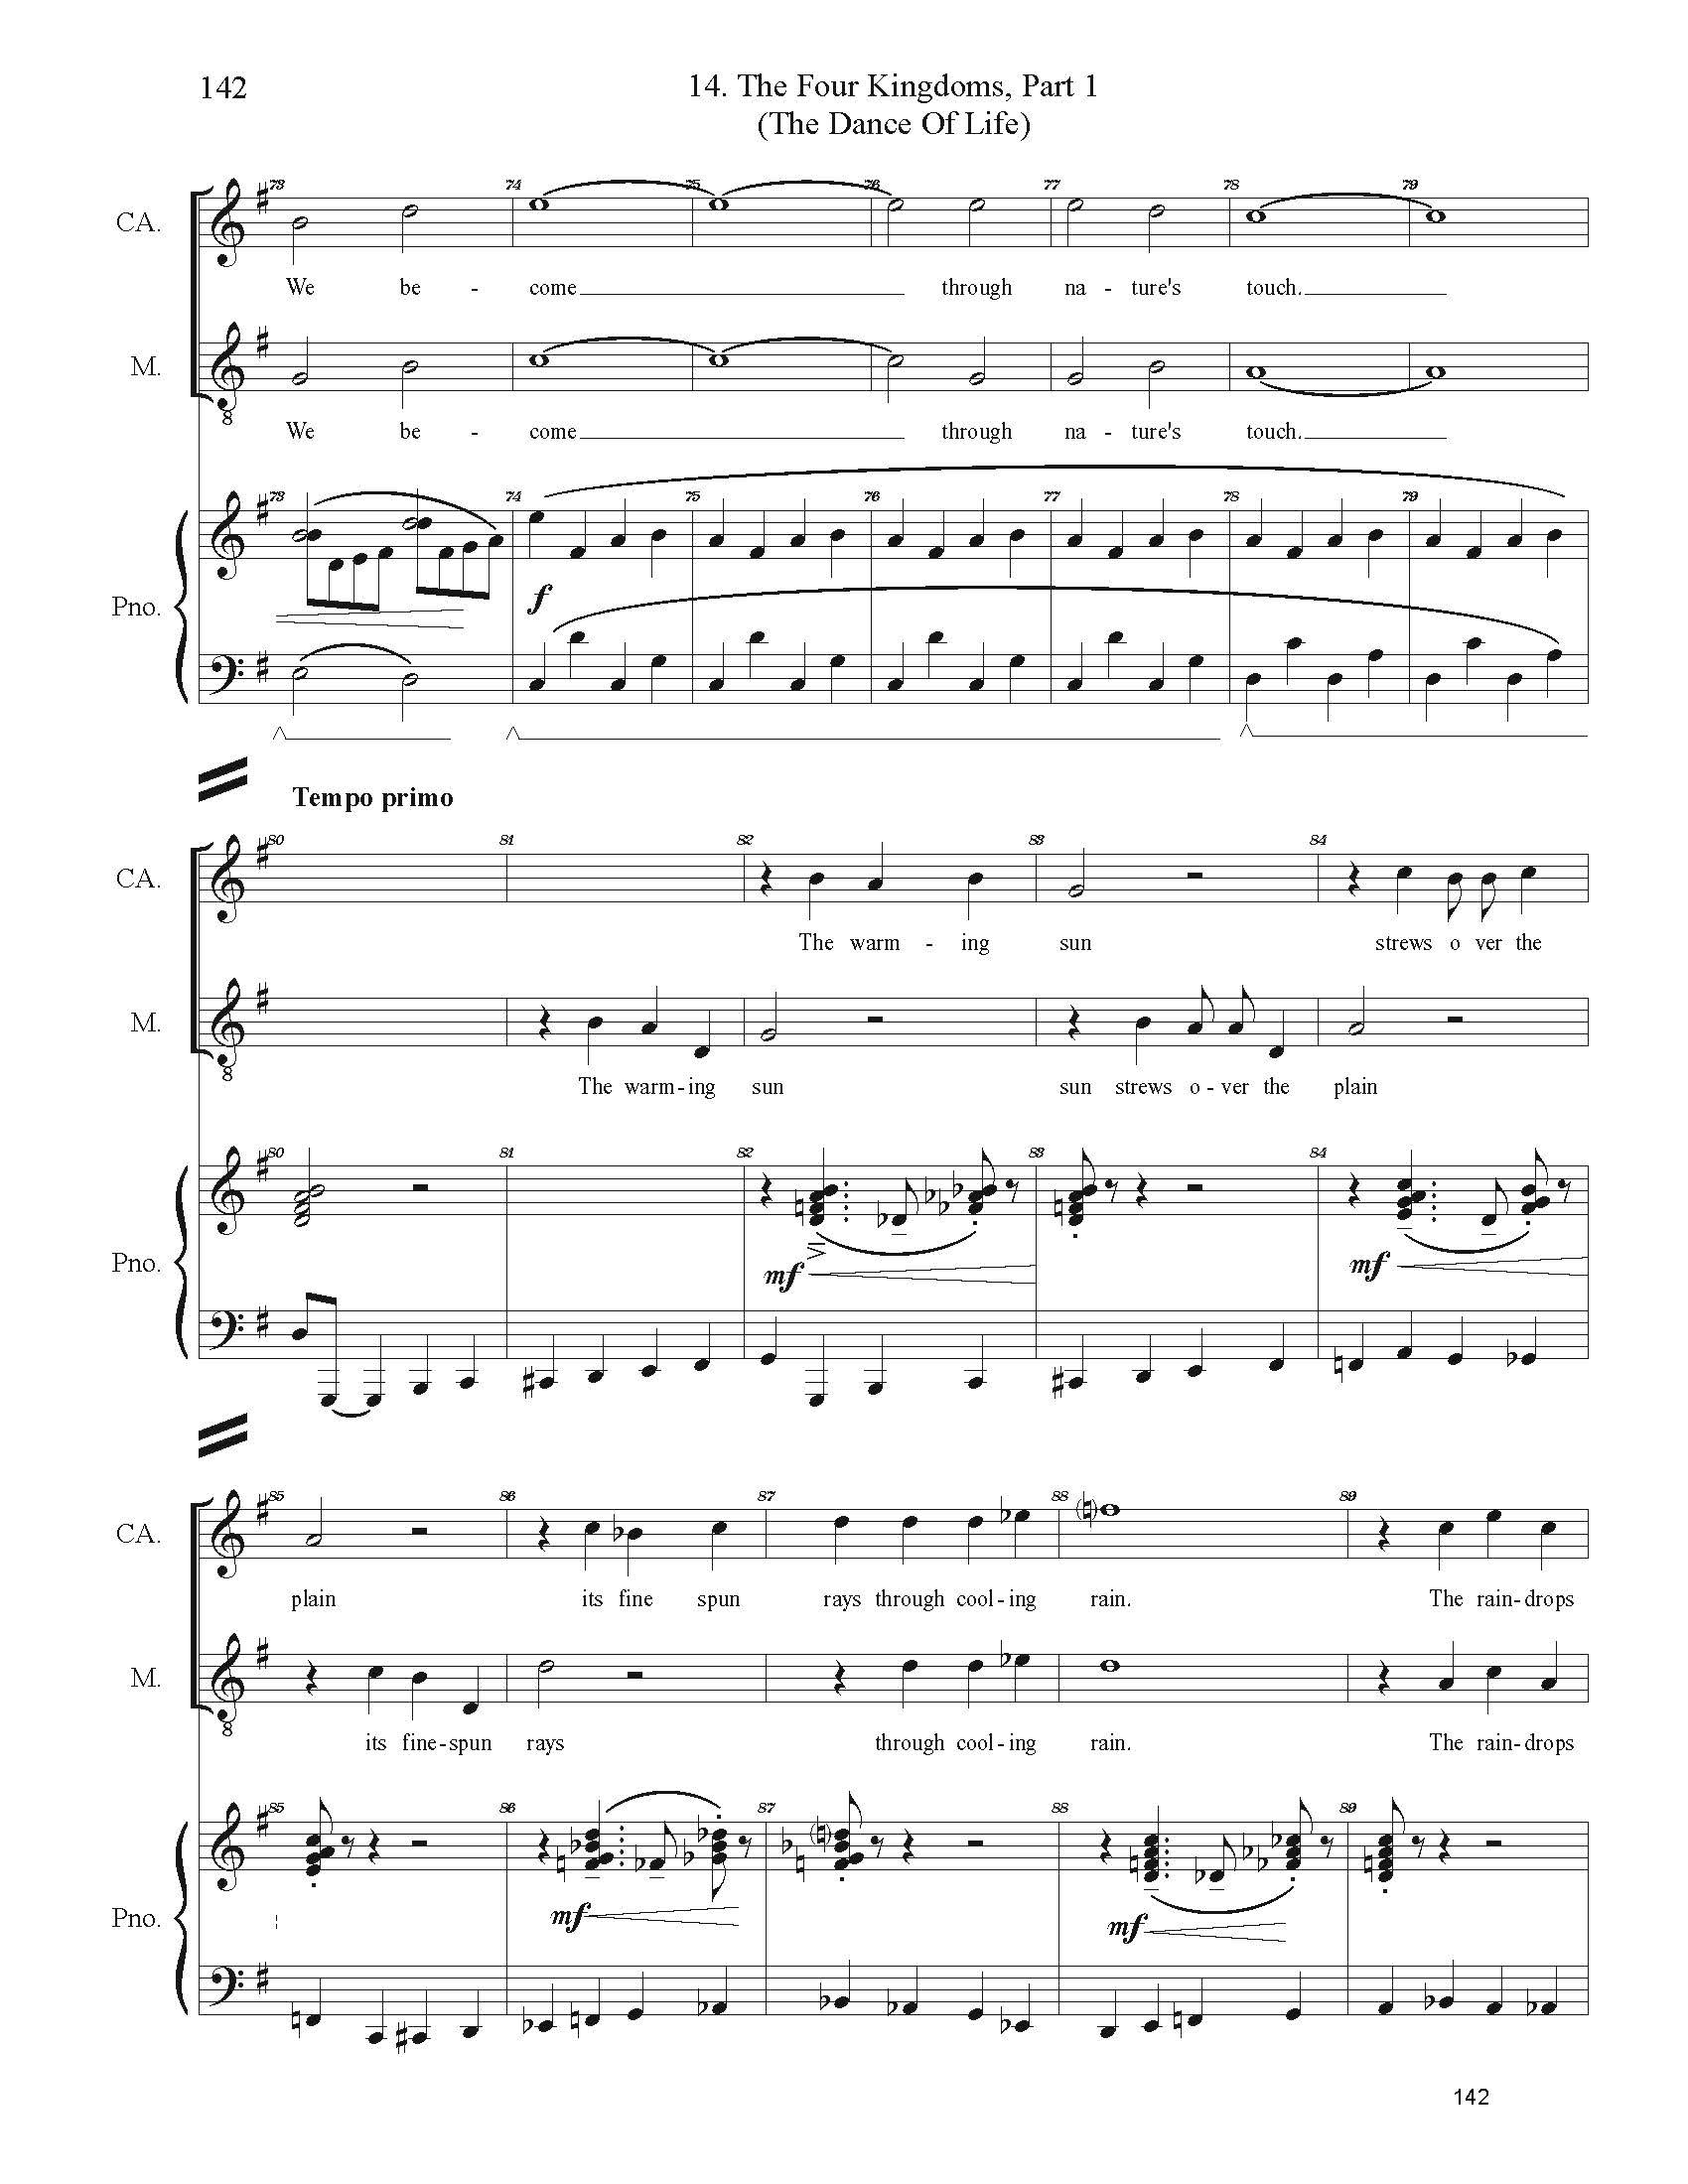 FULL PIANO VOCAL SCORE DRAFT 1 - Score_Page_142.jpg